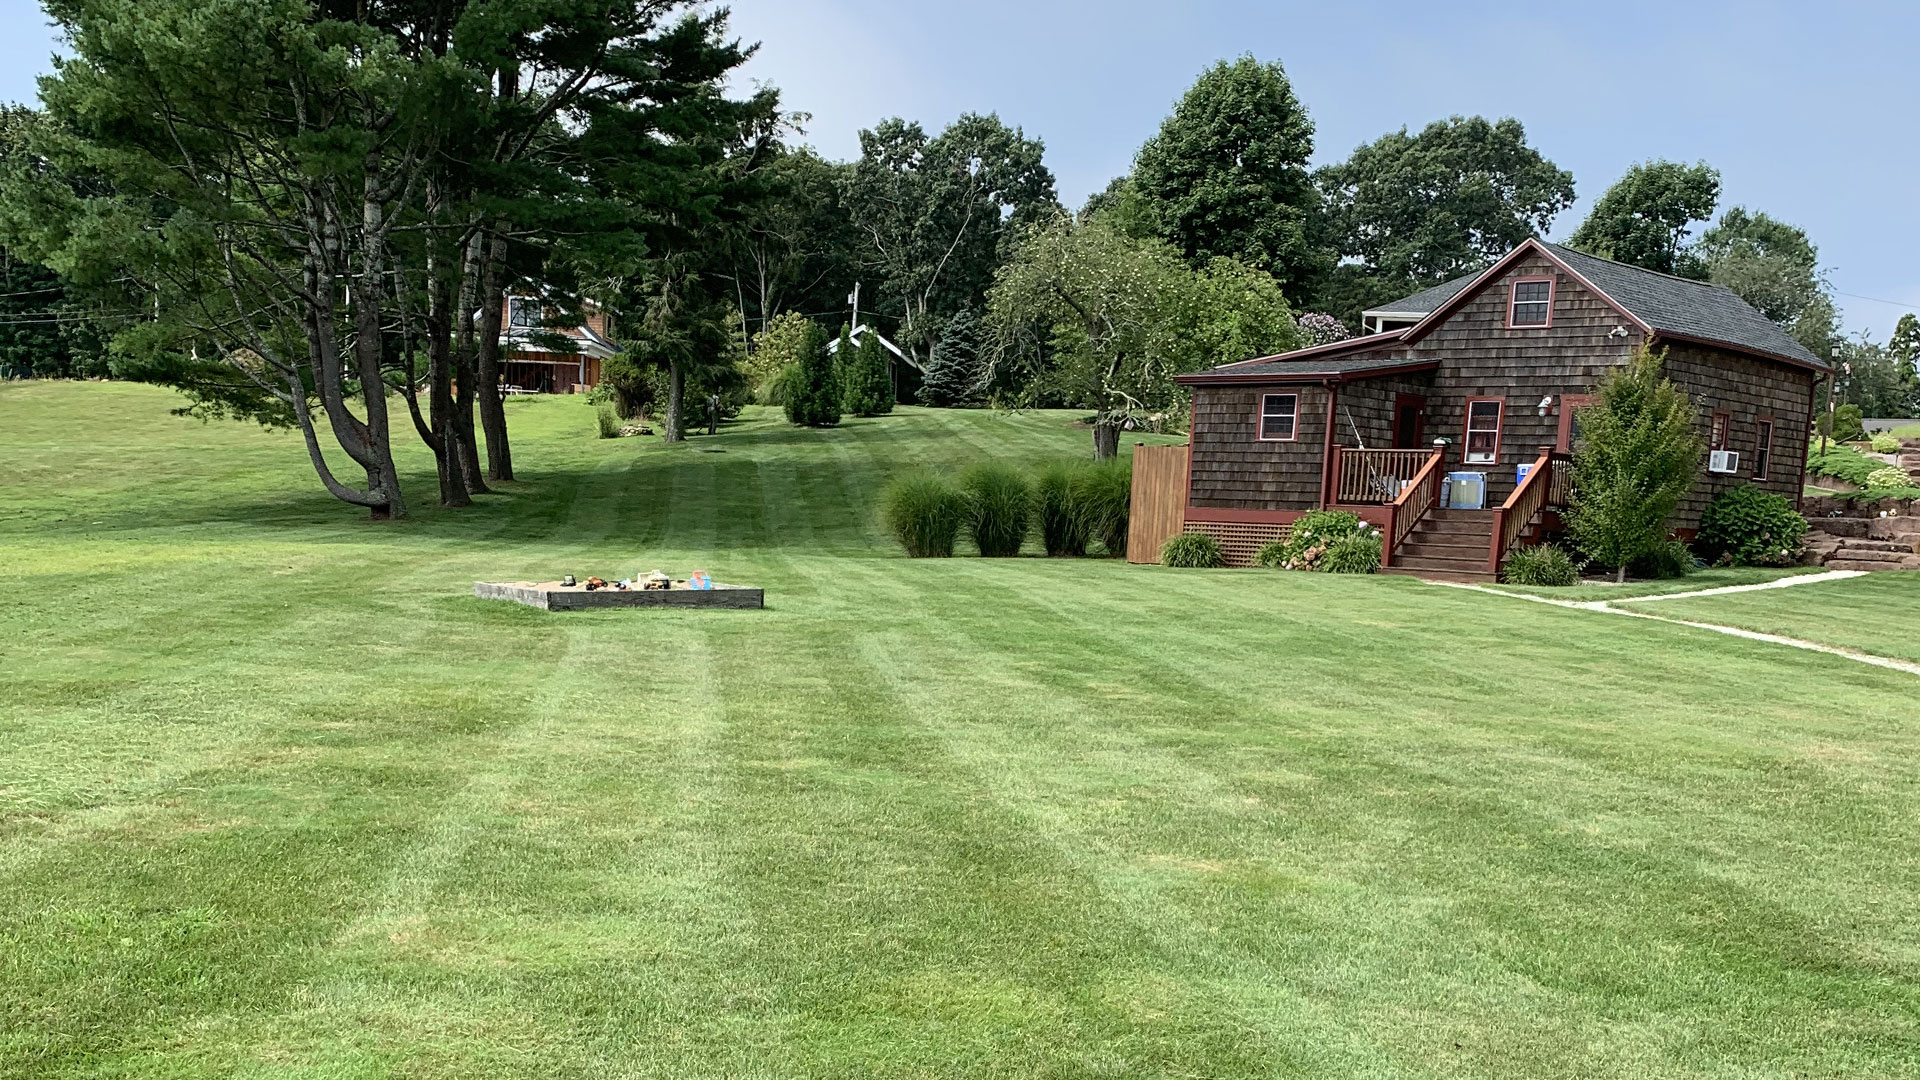 Beautiful, newly mowed home lawn in Hopkinton, RI.